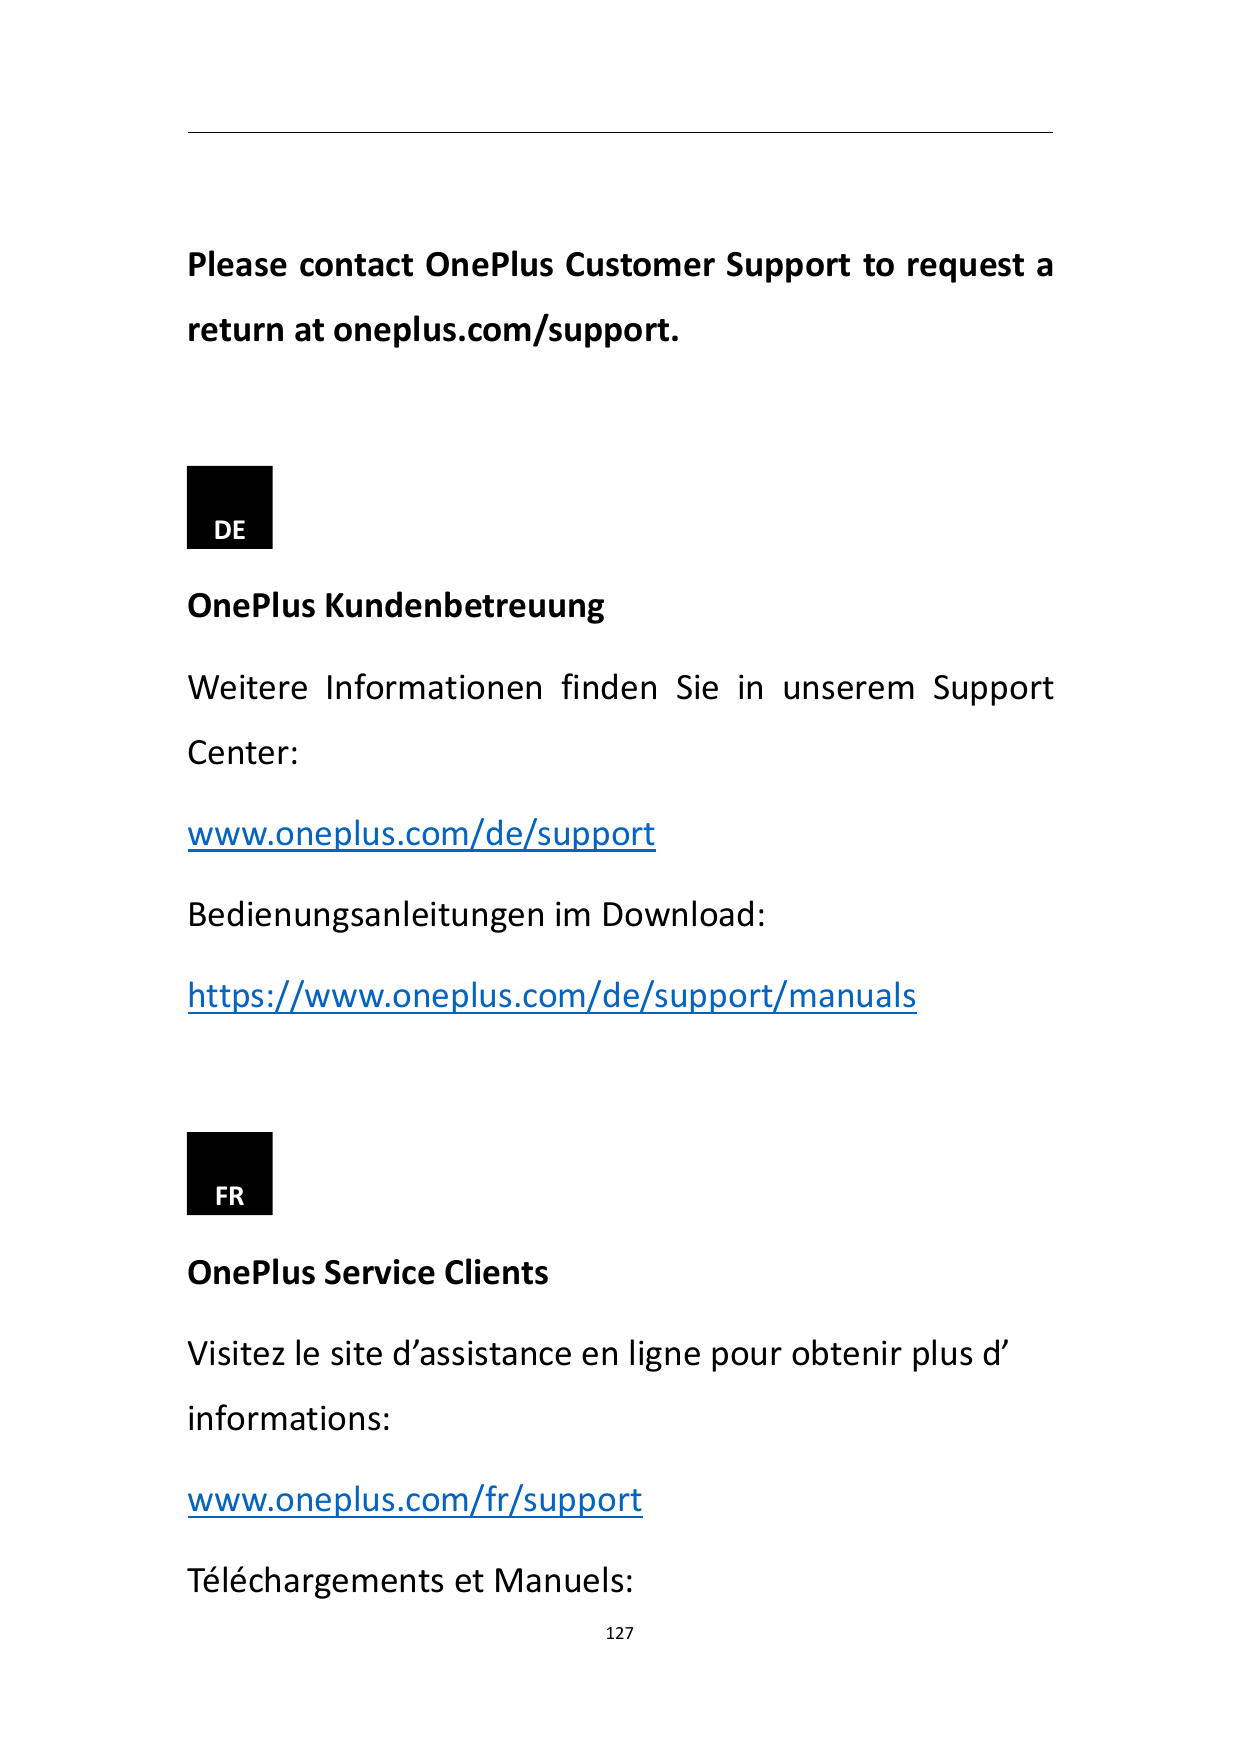 Please contact OnePlus Customer Support to request areturn at oneplus.com/support.DEOnePlus KundenbetreuungWeitere Informationen